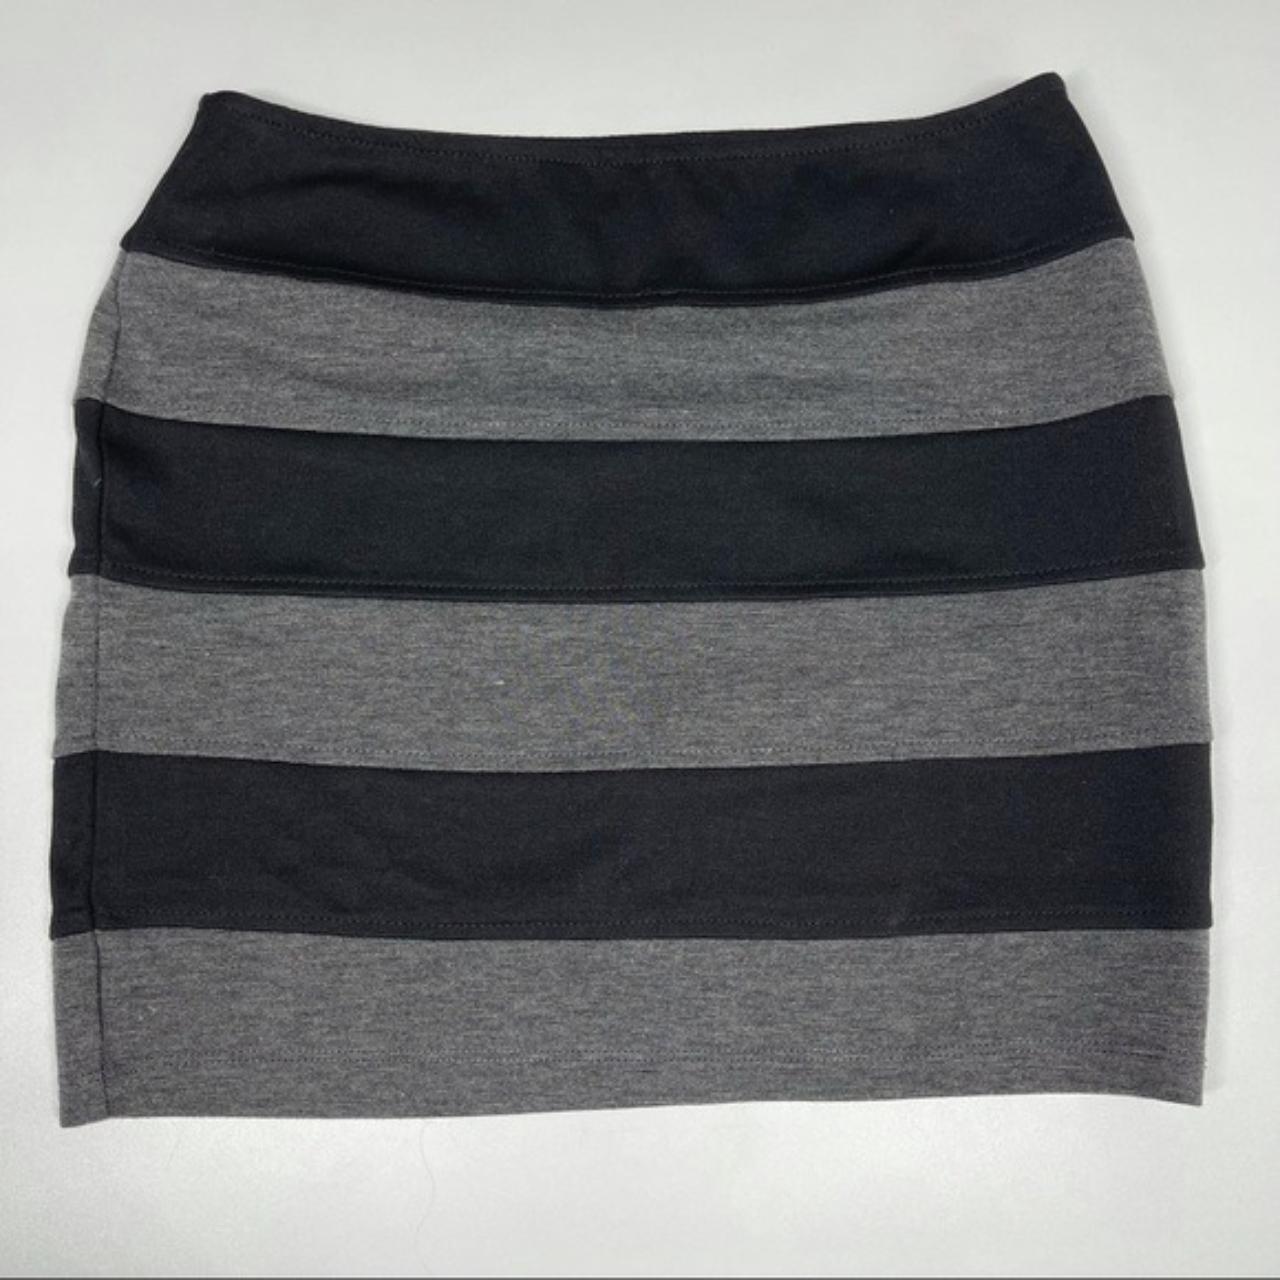 Basic House Skirt - black and gray - tight fitting -... - Depop